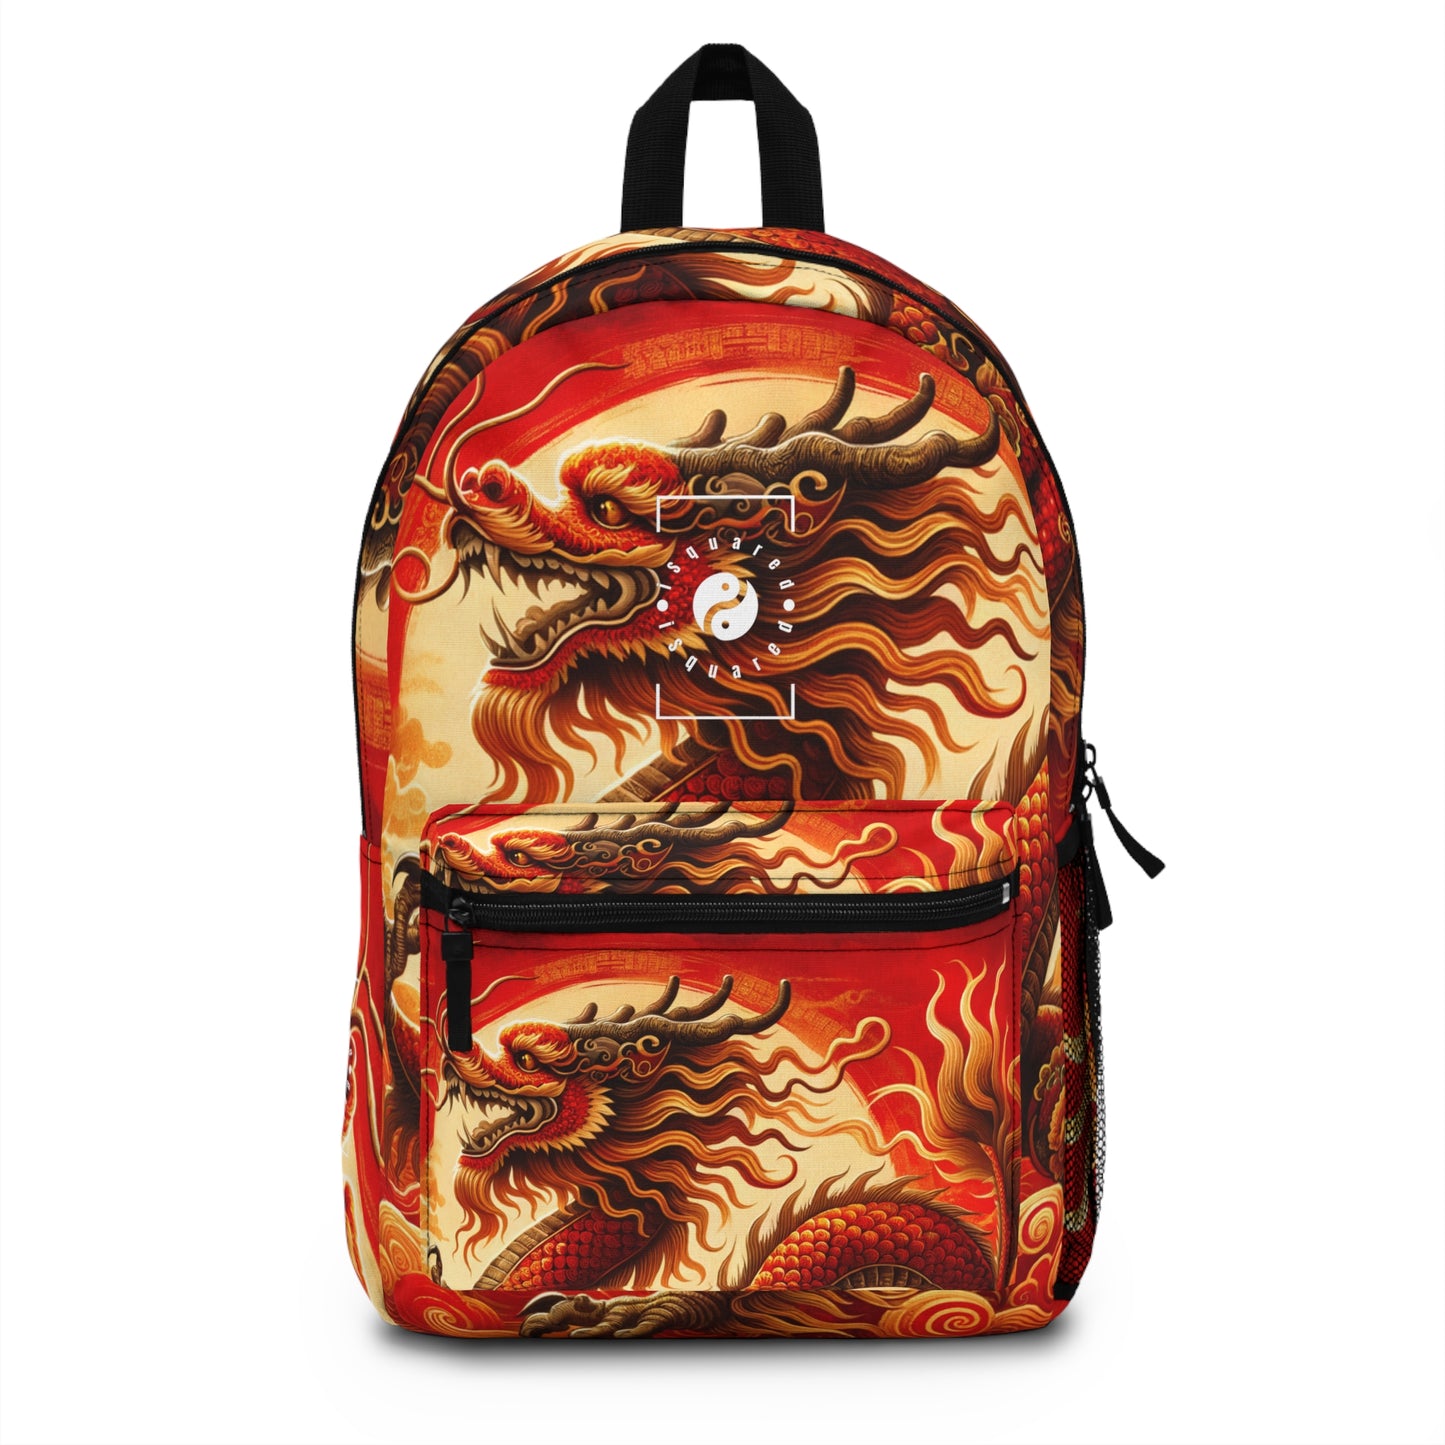 "Golden Dragon Dance in the Crimson Twilight" - Backpack